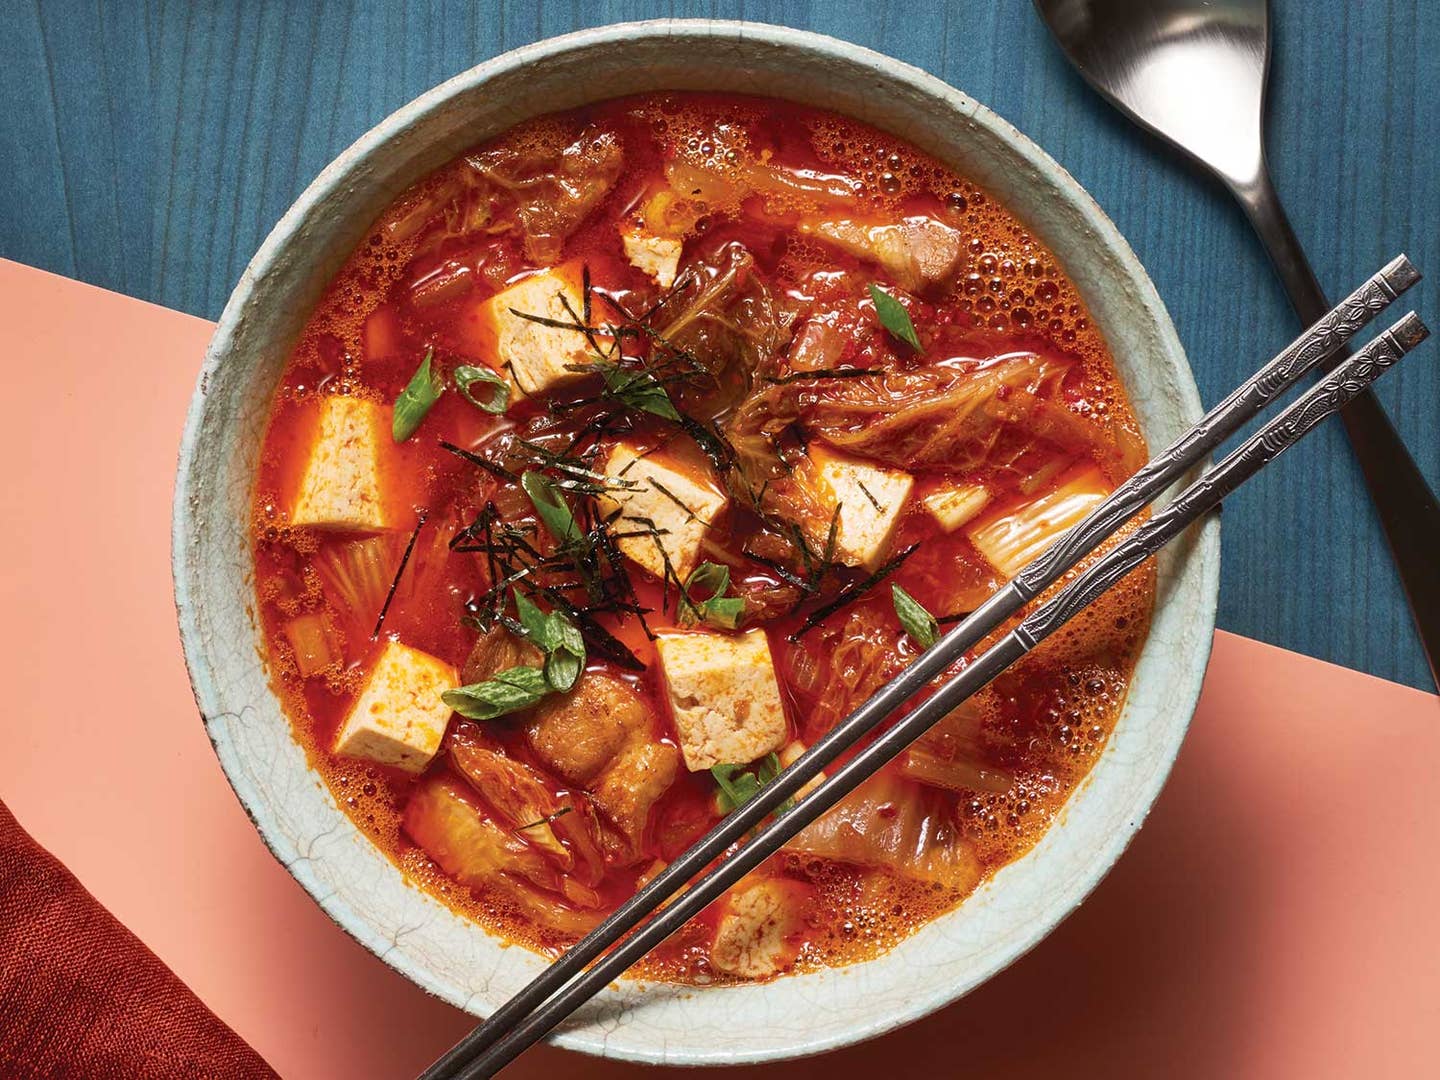 Kimchi-Jjigae (Korean Kimchi Stew with Pork Belly and Tofu)